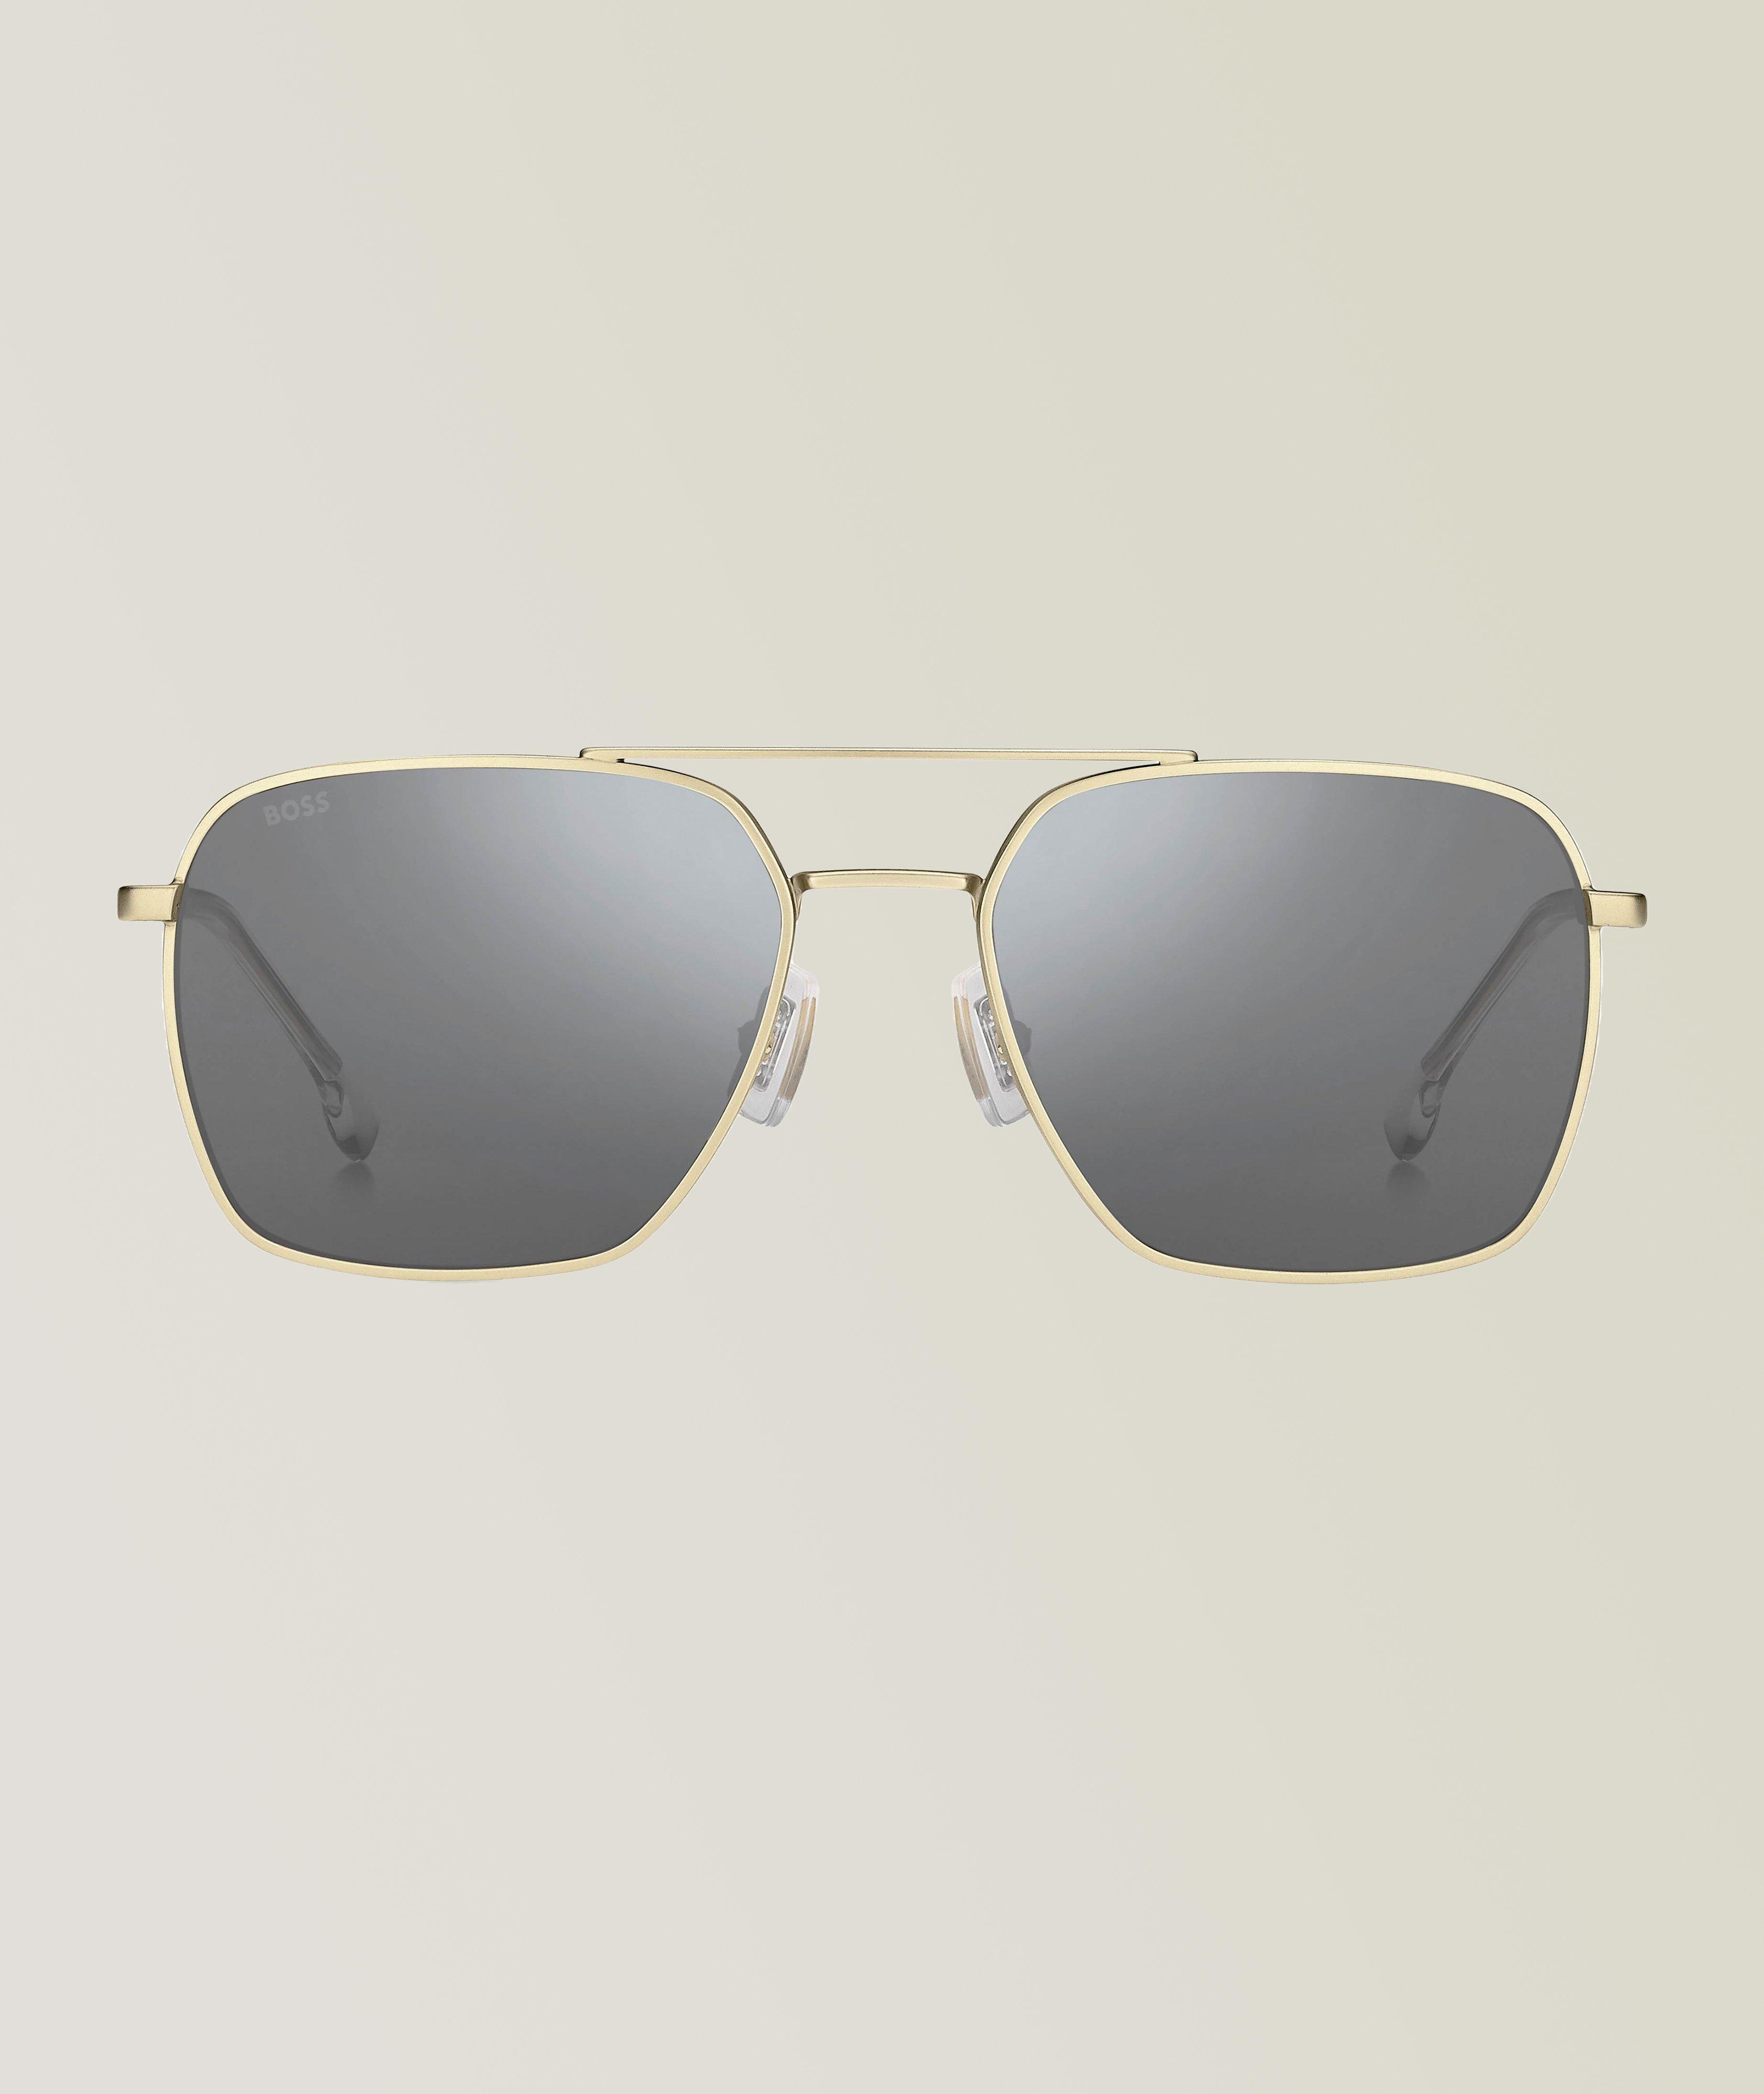 Hugo Boss Matt Gold Sunglasses With Silver Mirror Lenses  image 0